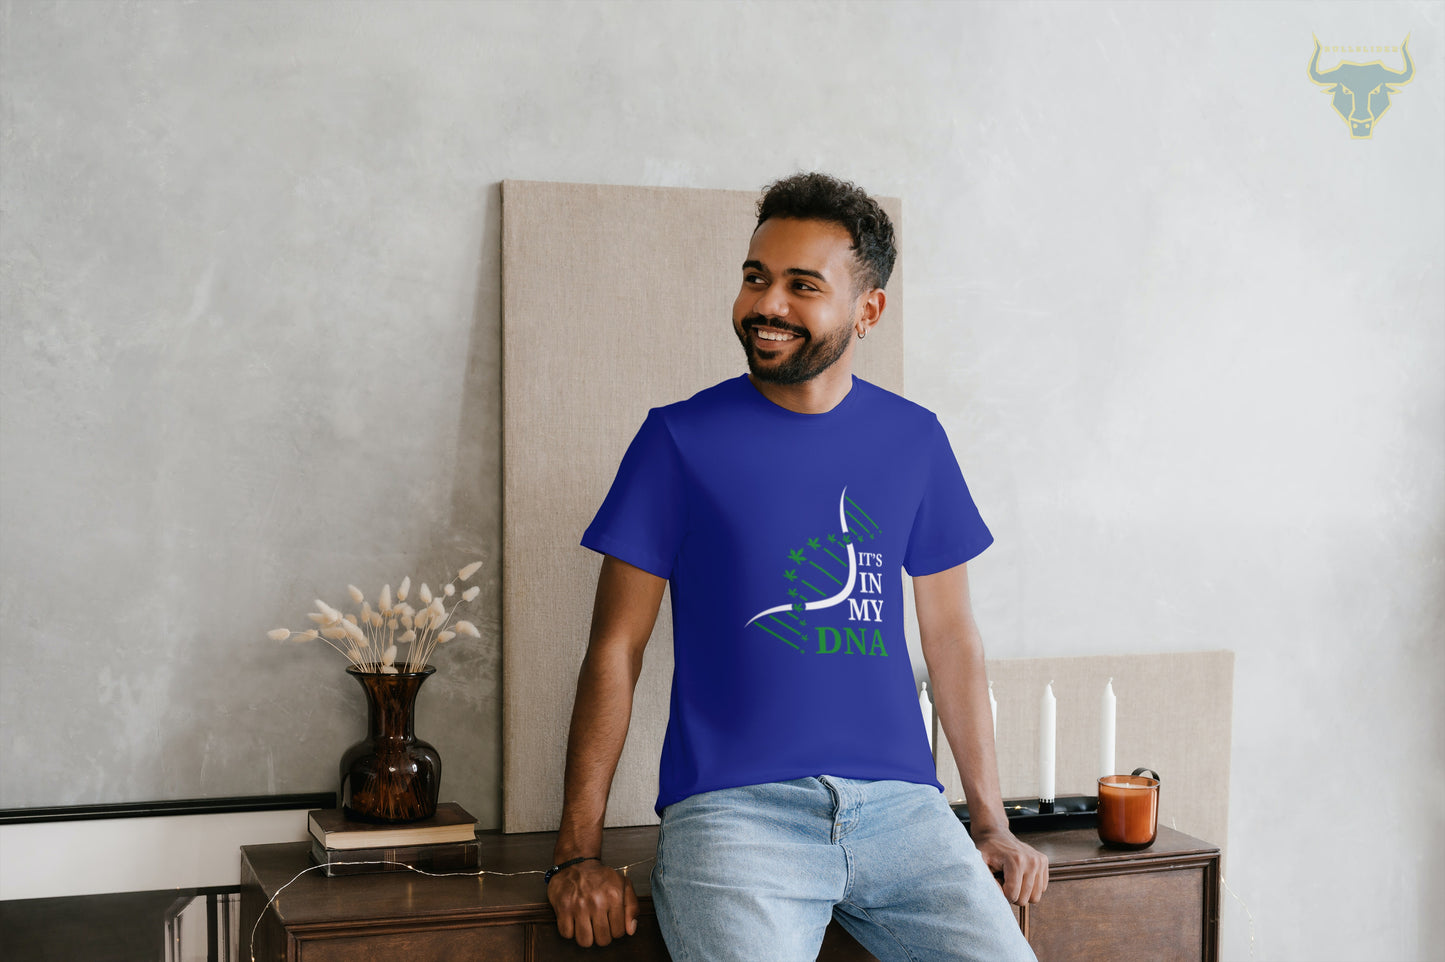 Men's printed DNA t-shirt